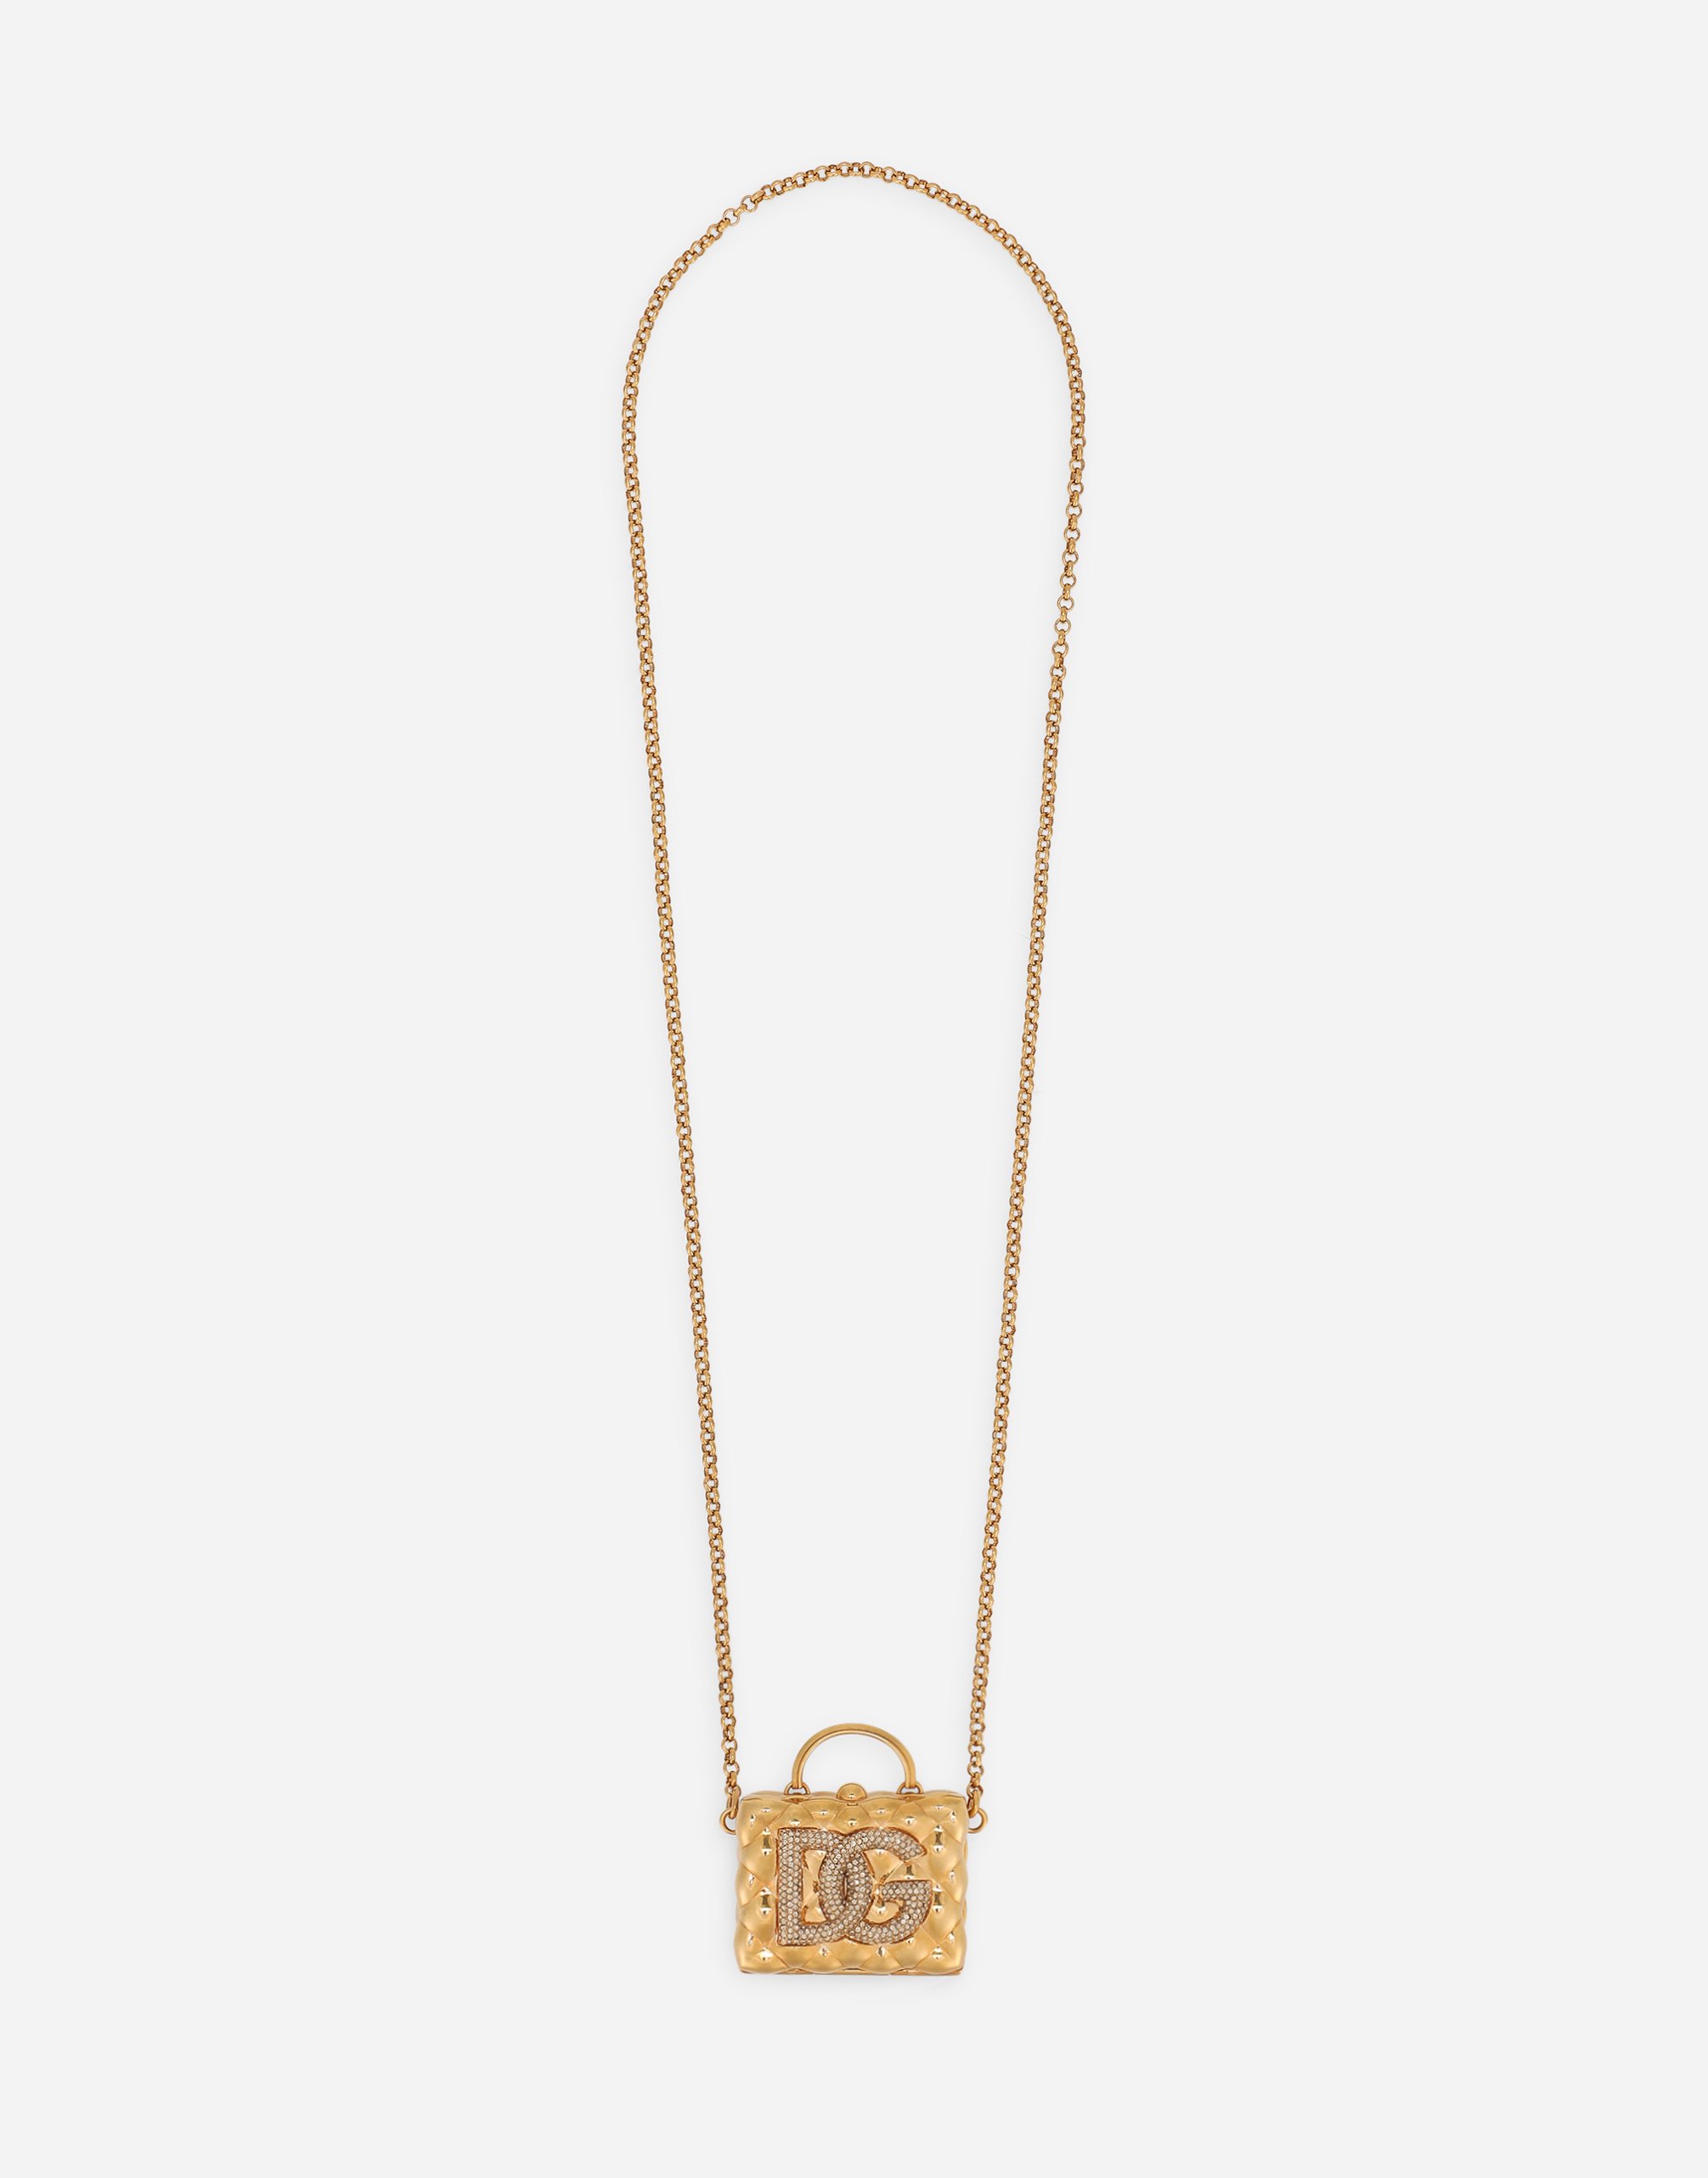 Vintage brass DG necklace in Gold